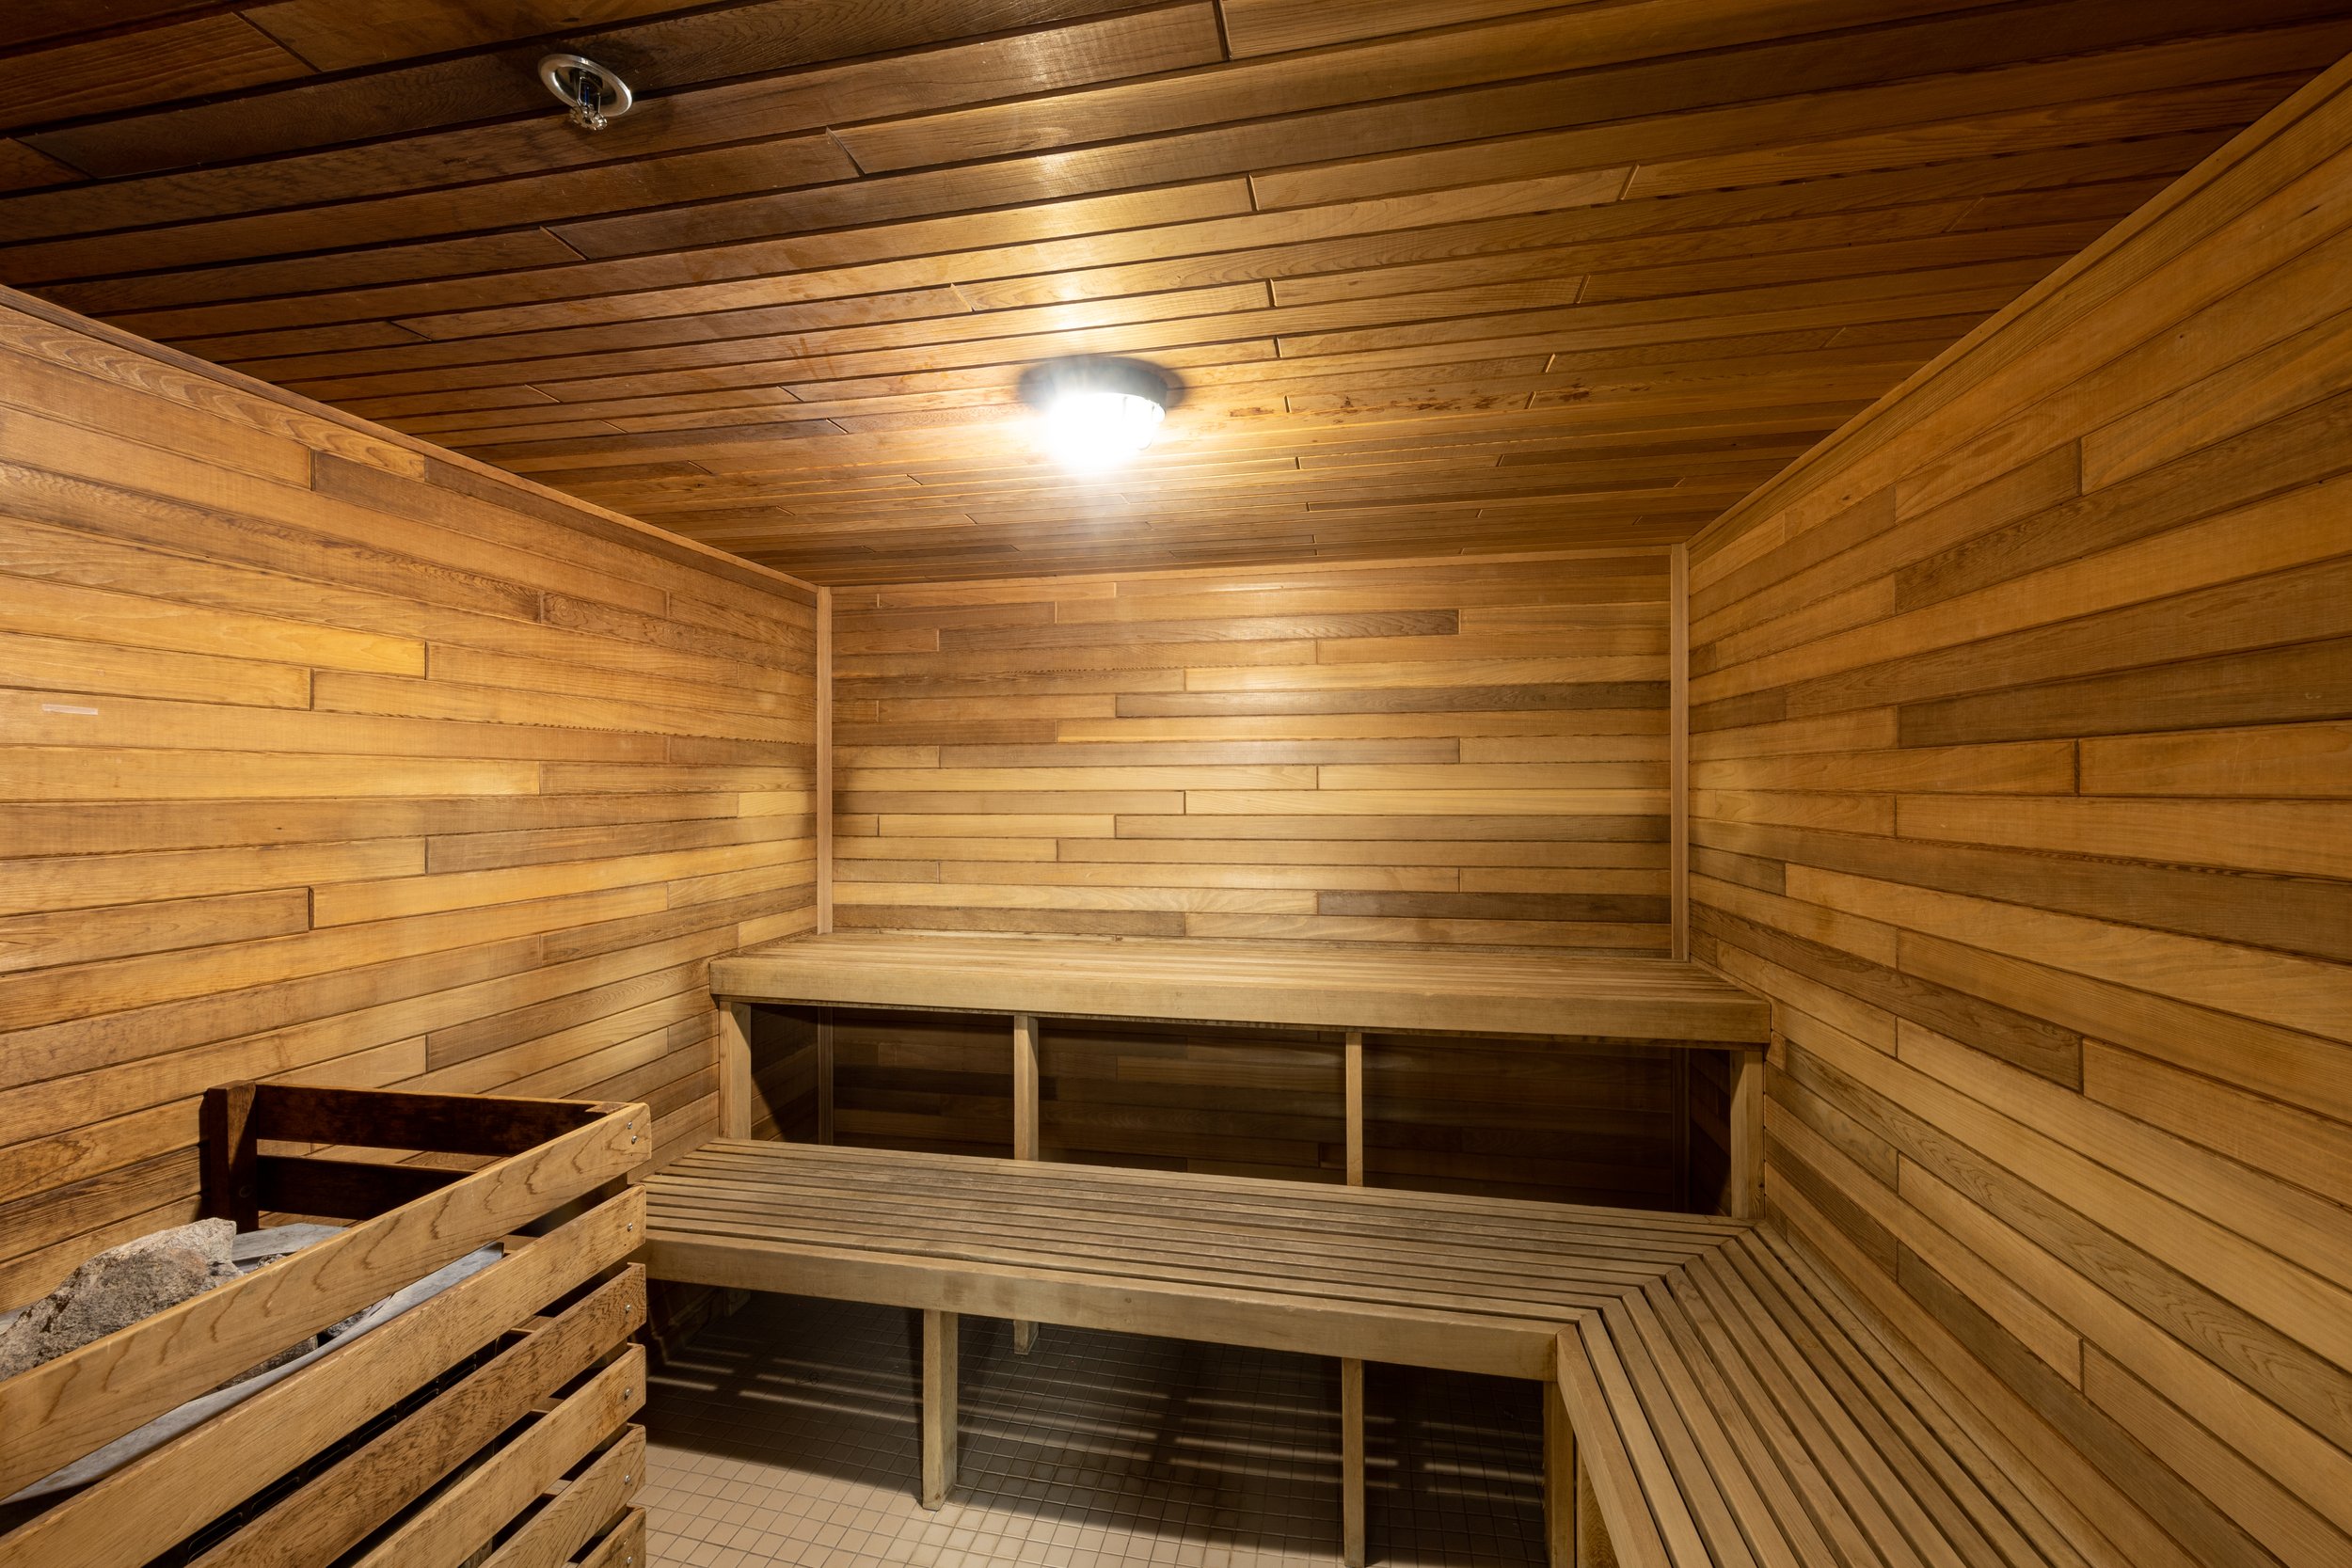 Rejuvenate in the Sauna at Glacier Mountaineer Lodge